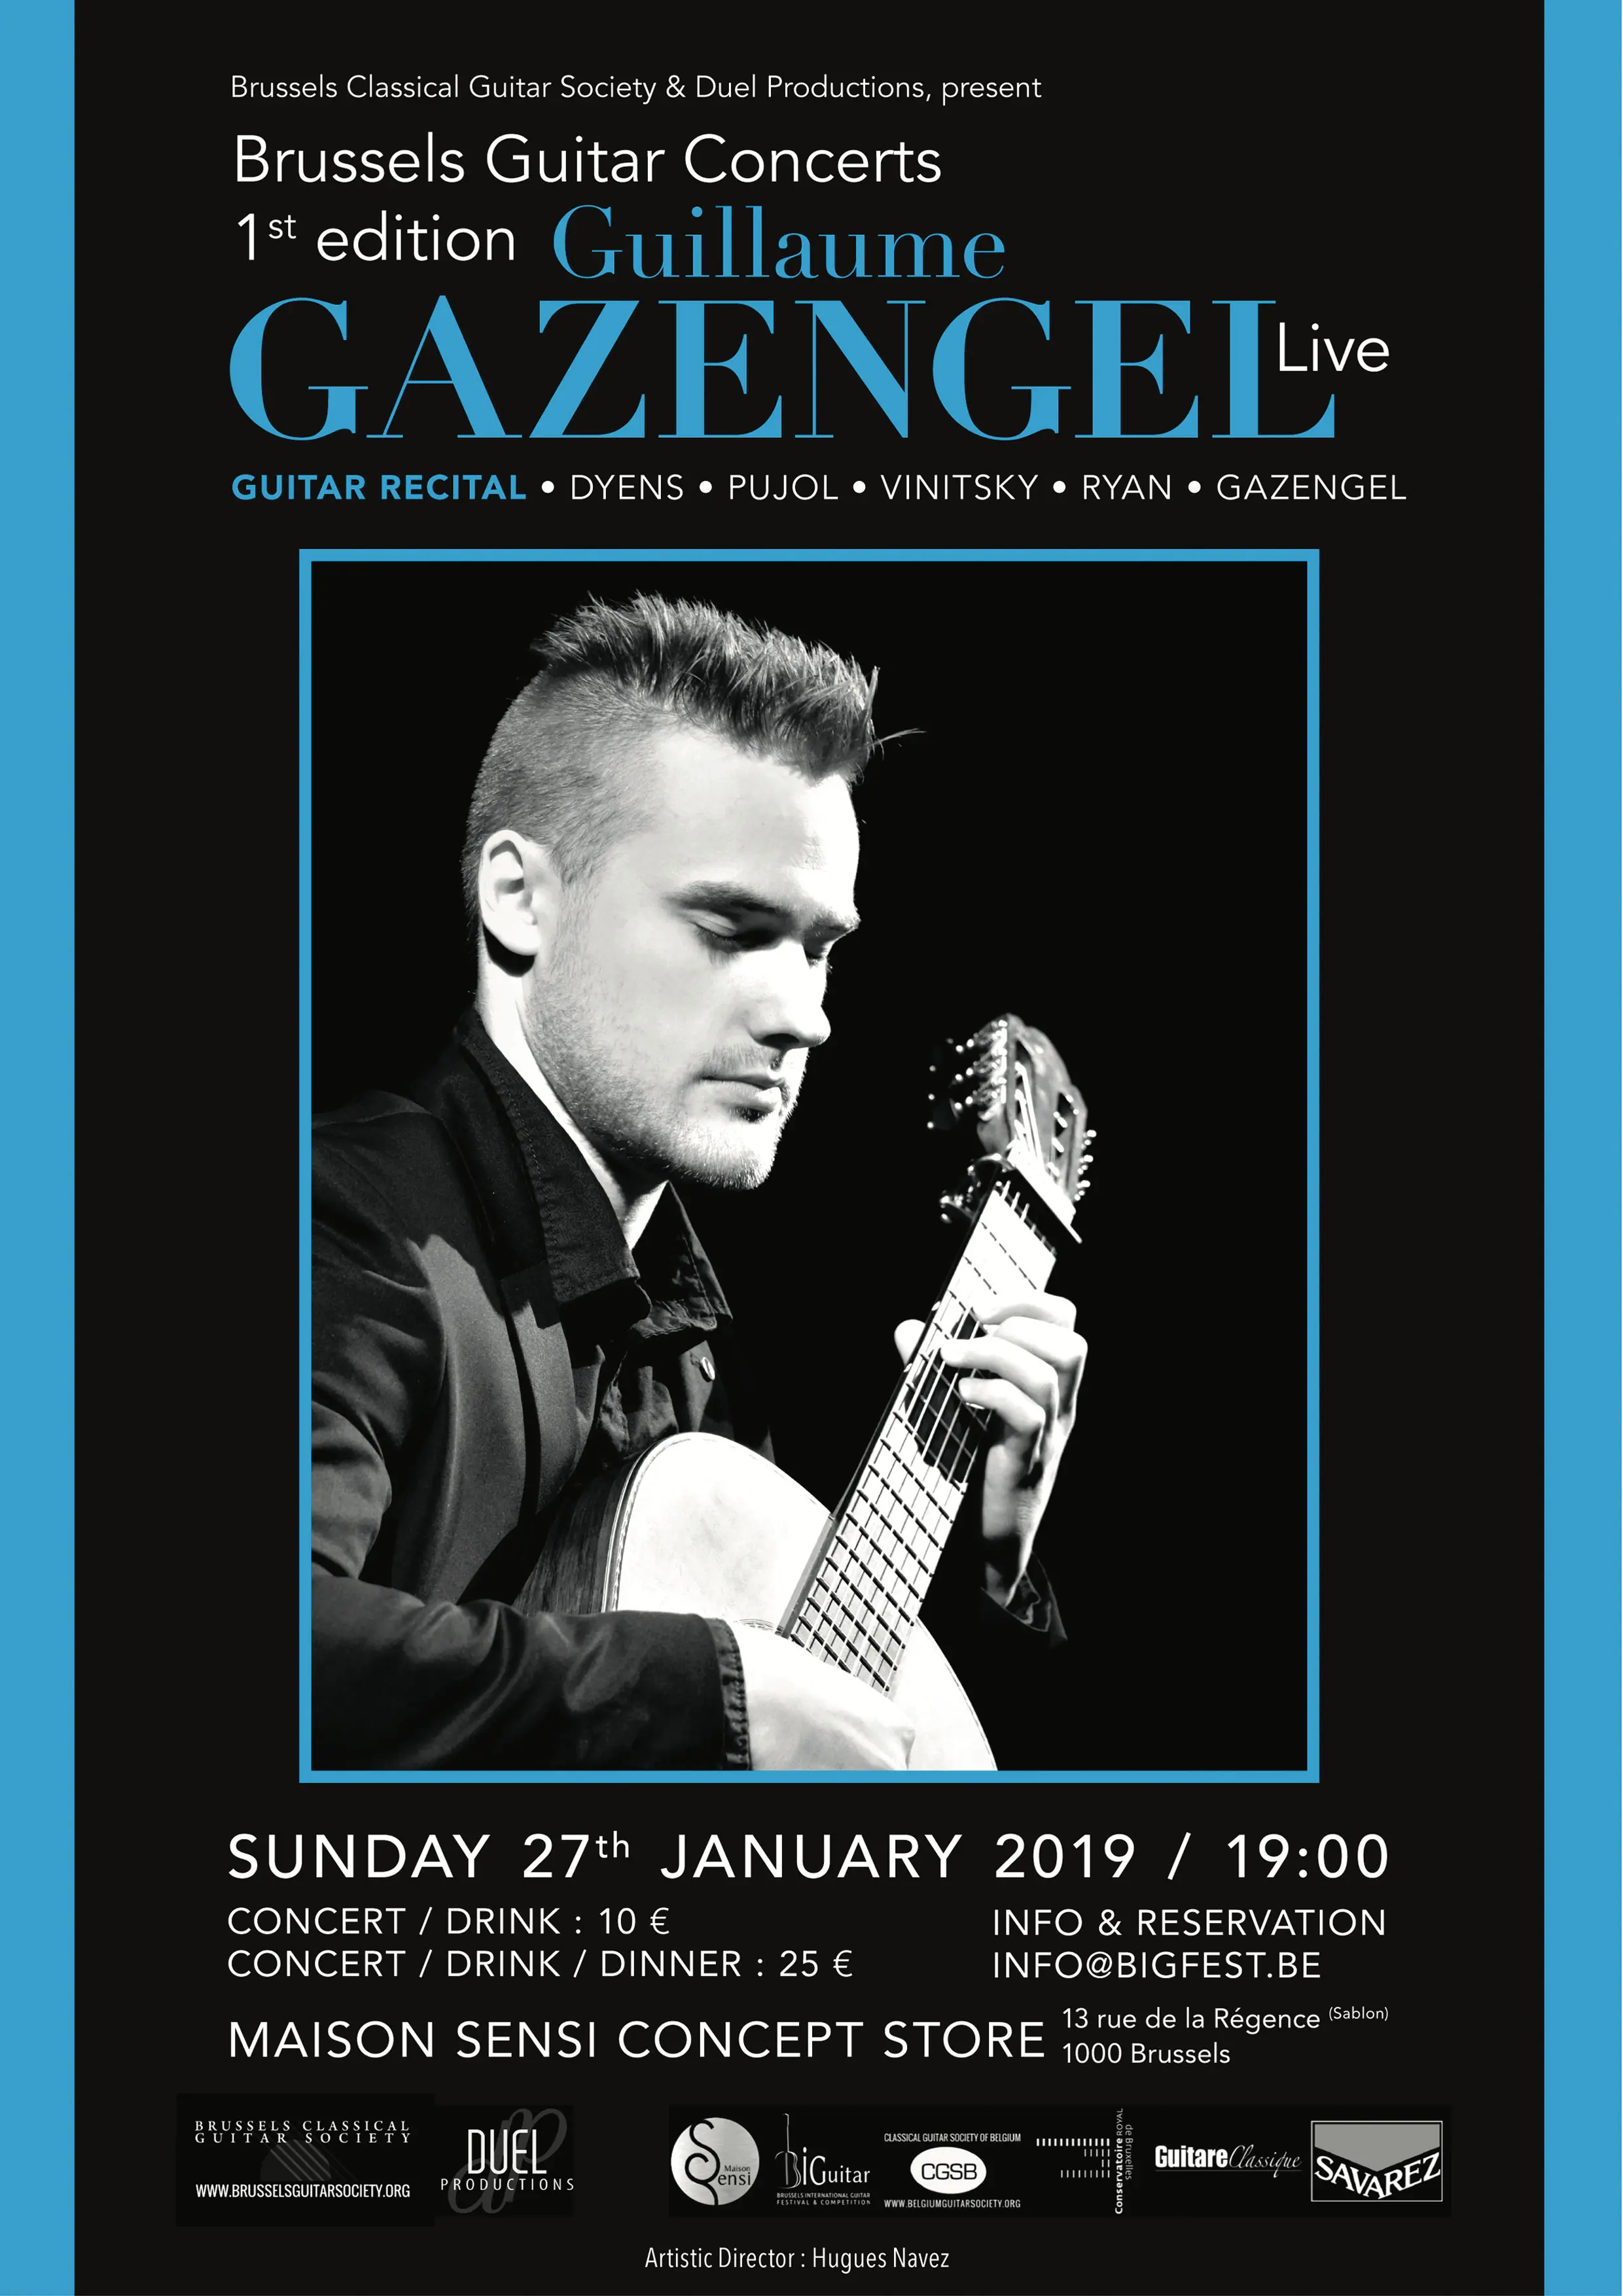 Guillaume Gazengel - « Guillaume Gazengel Live » - Brussels Guitar Concerts